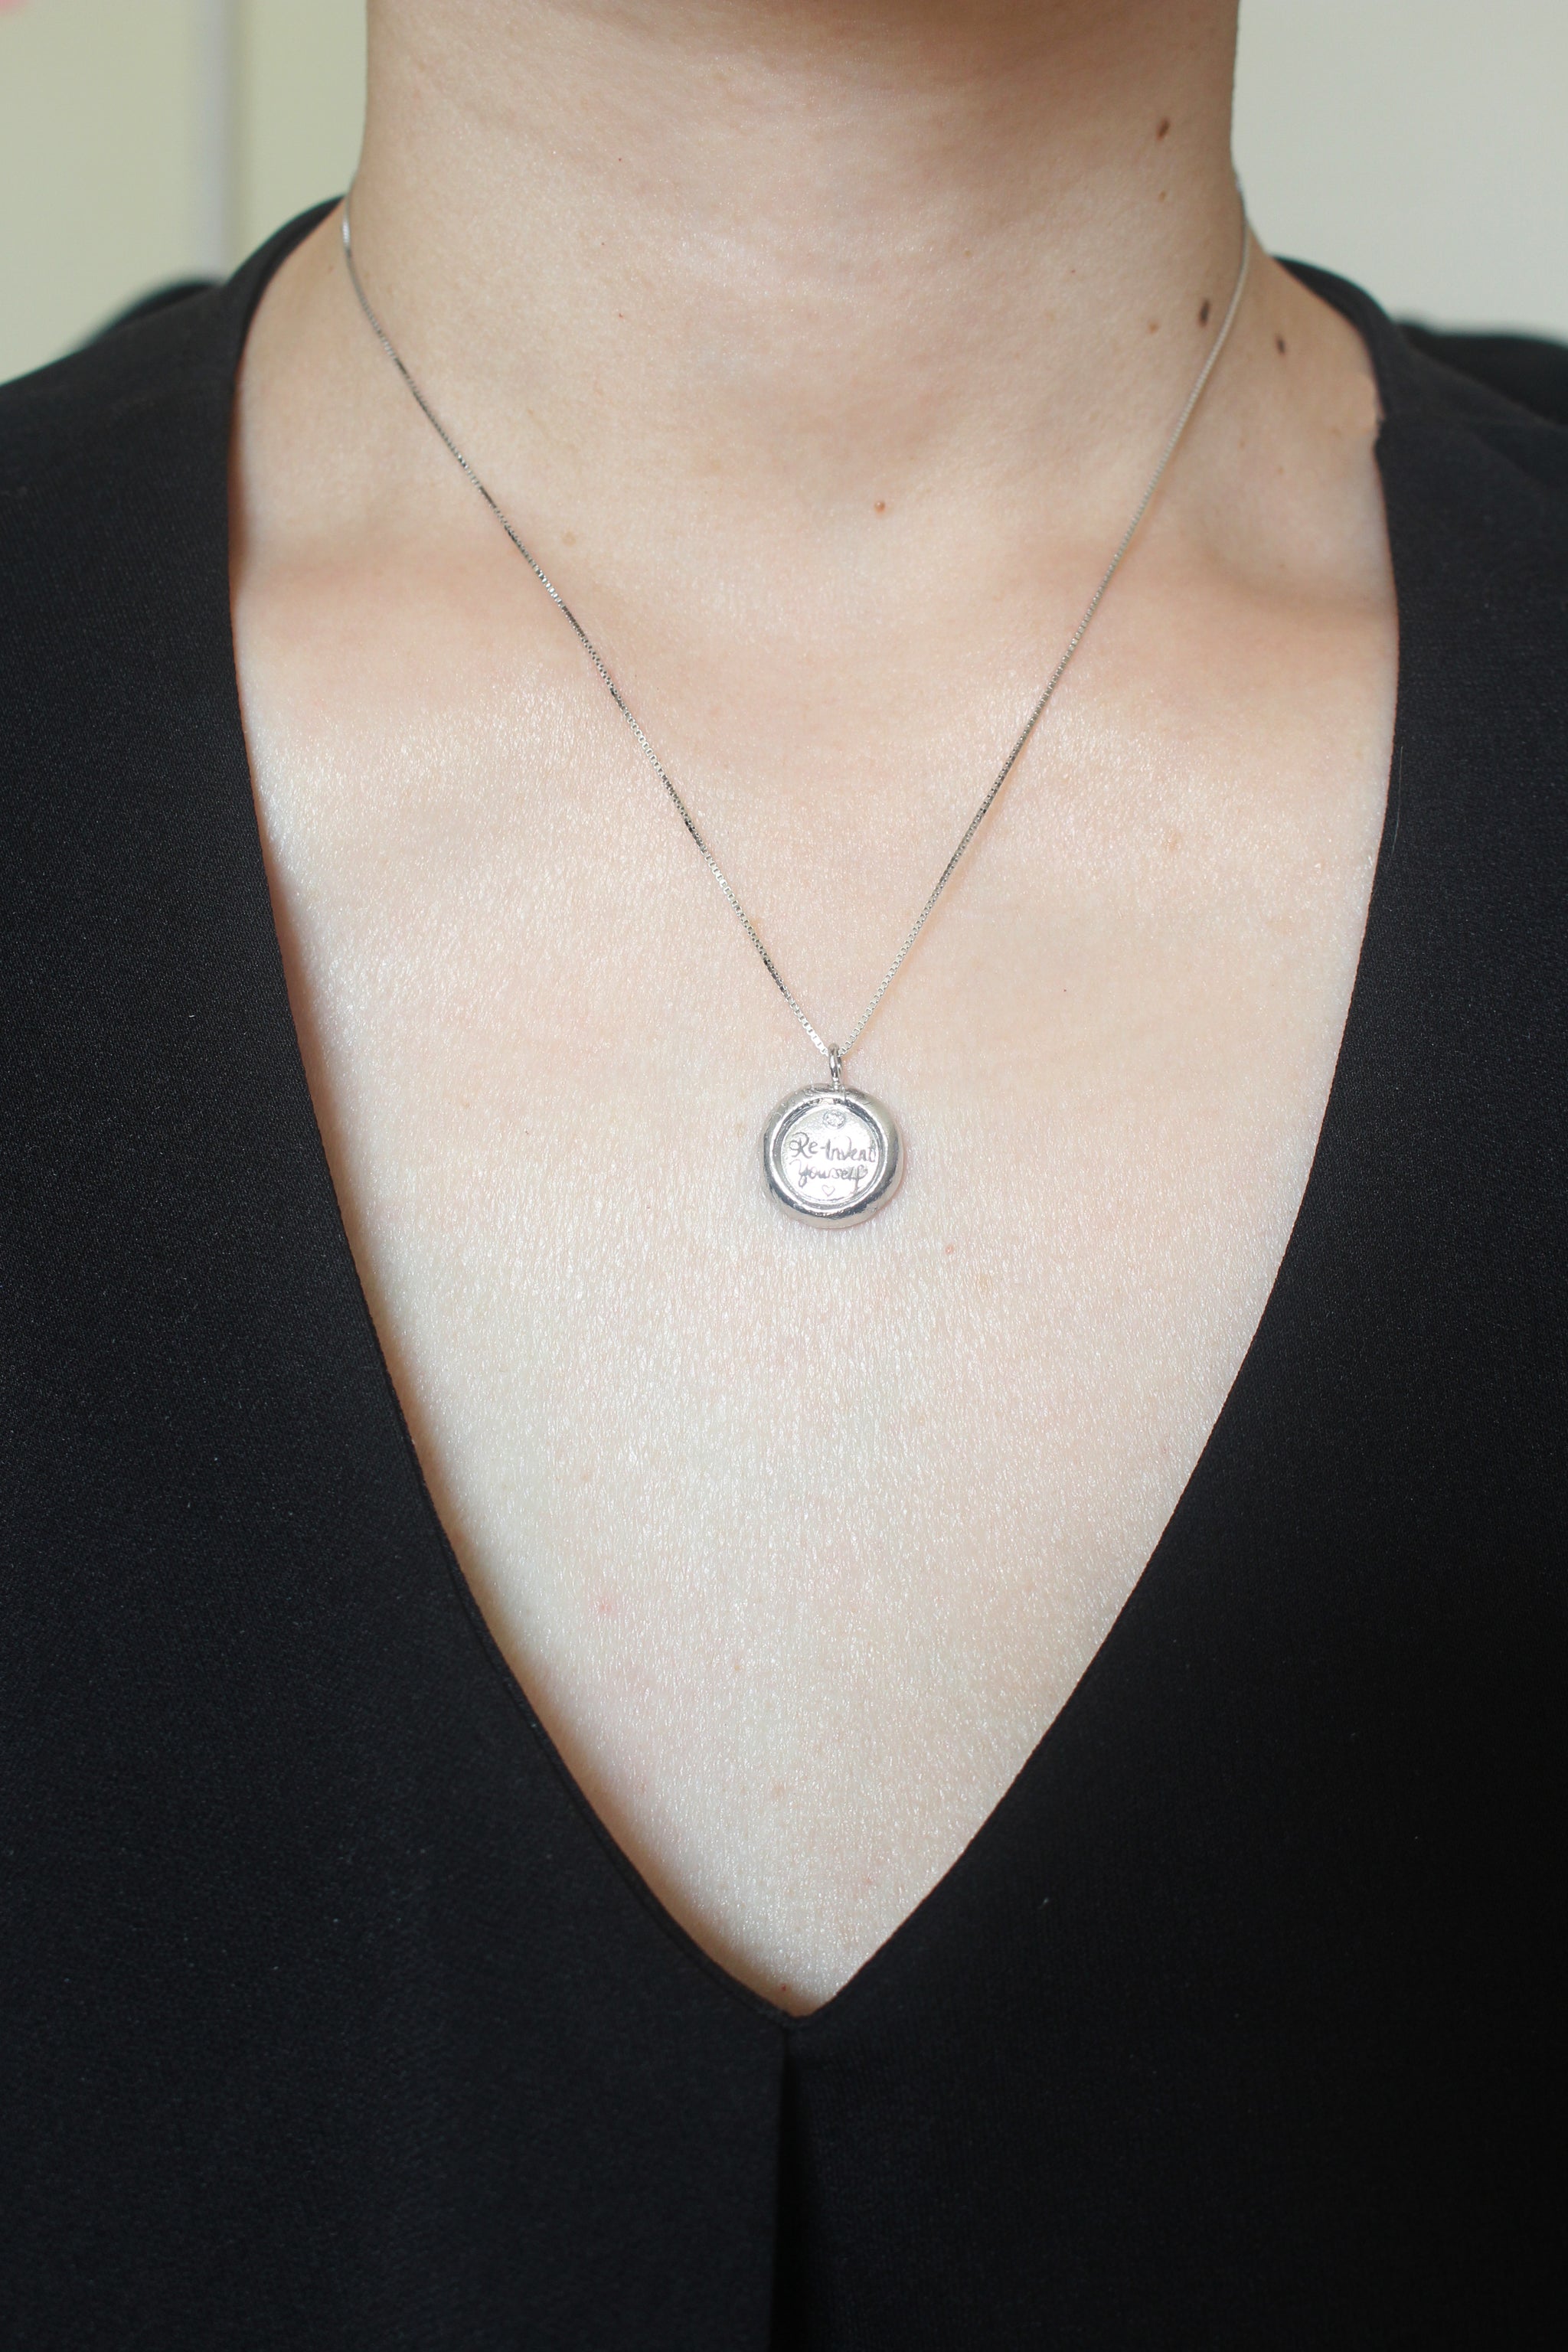 Carpe Diem - Empowerment Diamond Silver Necklace